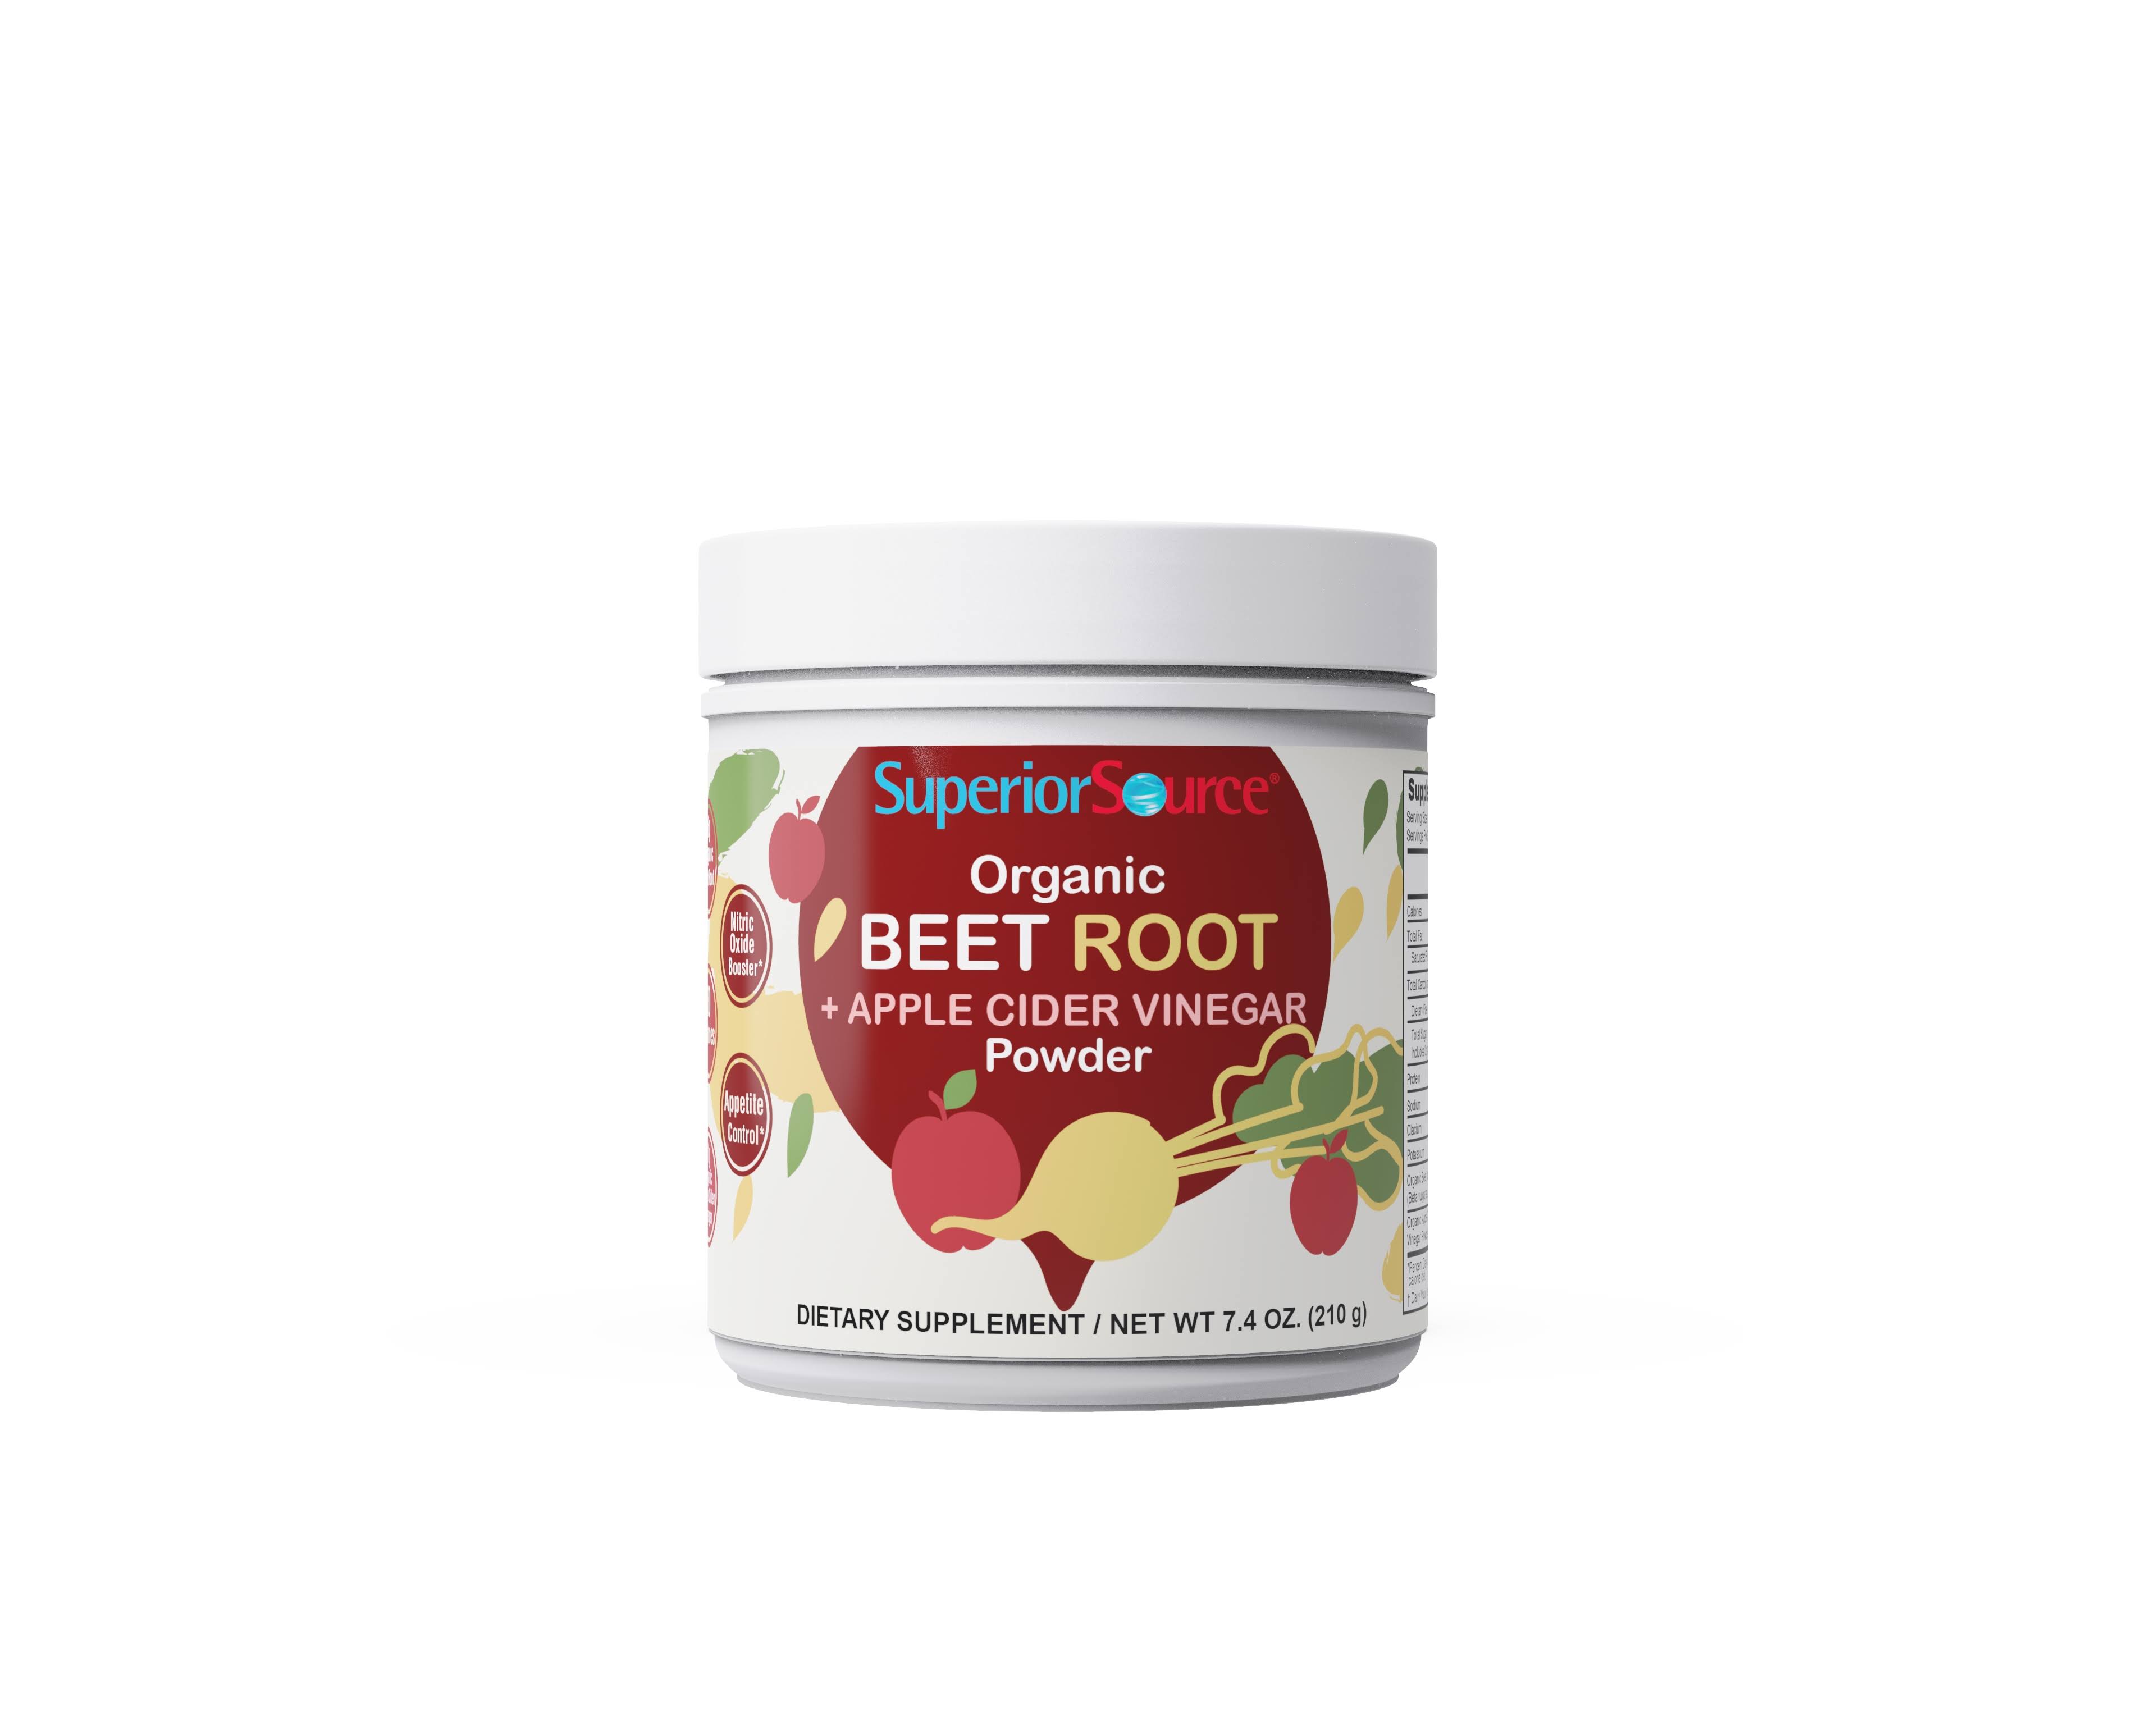 Organic Beet Root + Apple Cider Vinegar Powder - 7.4 oz.